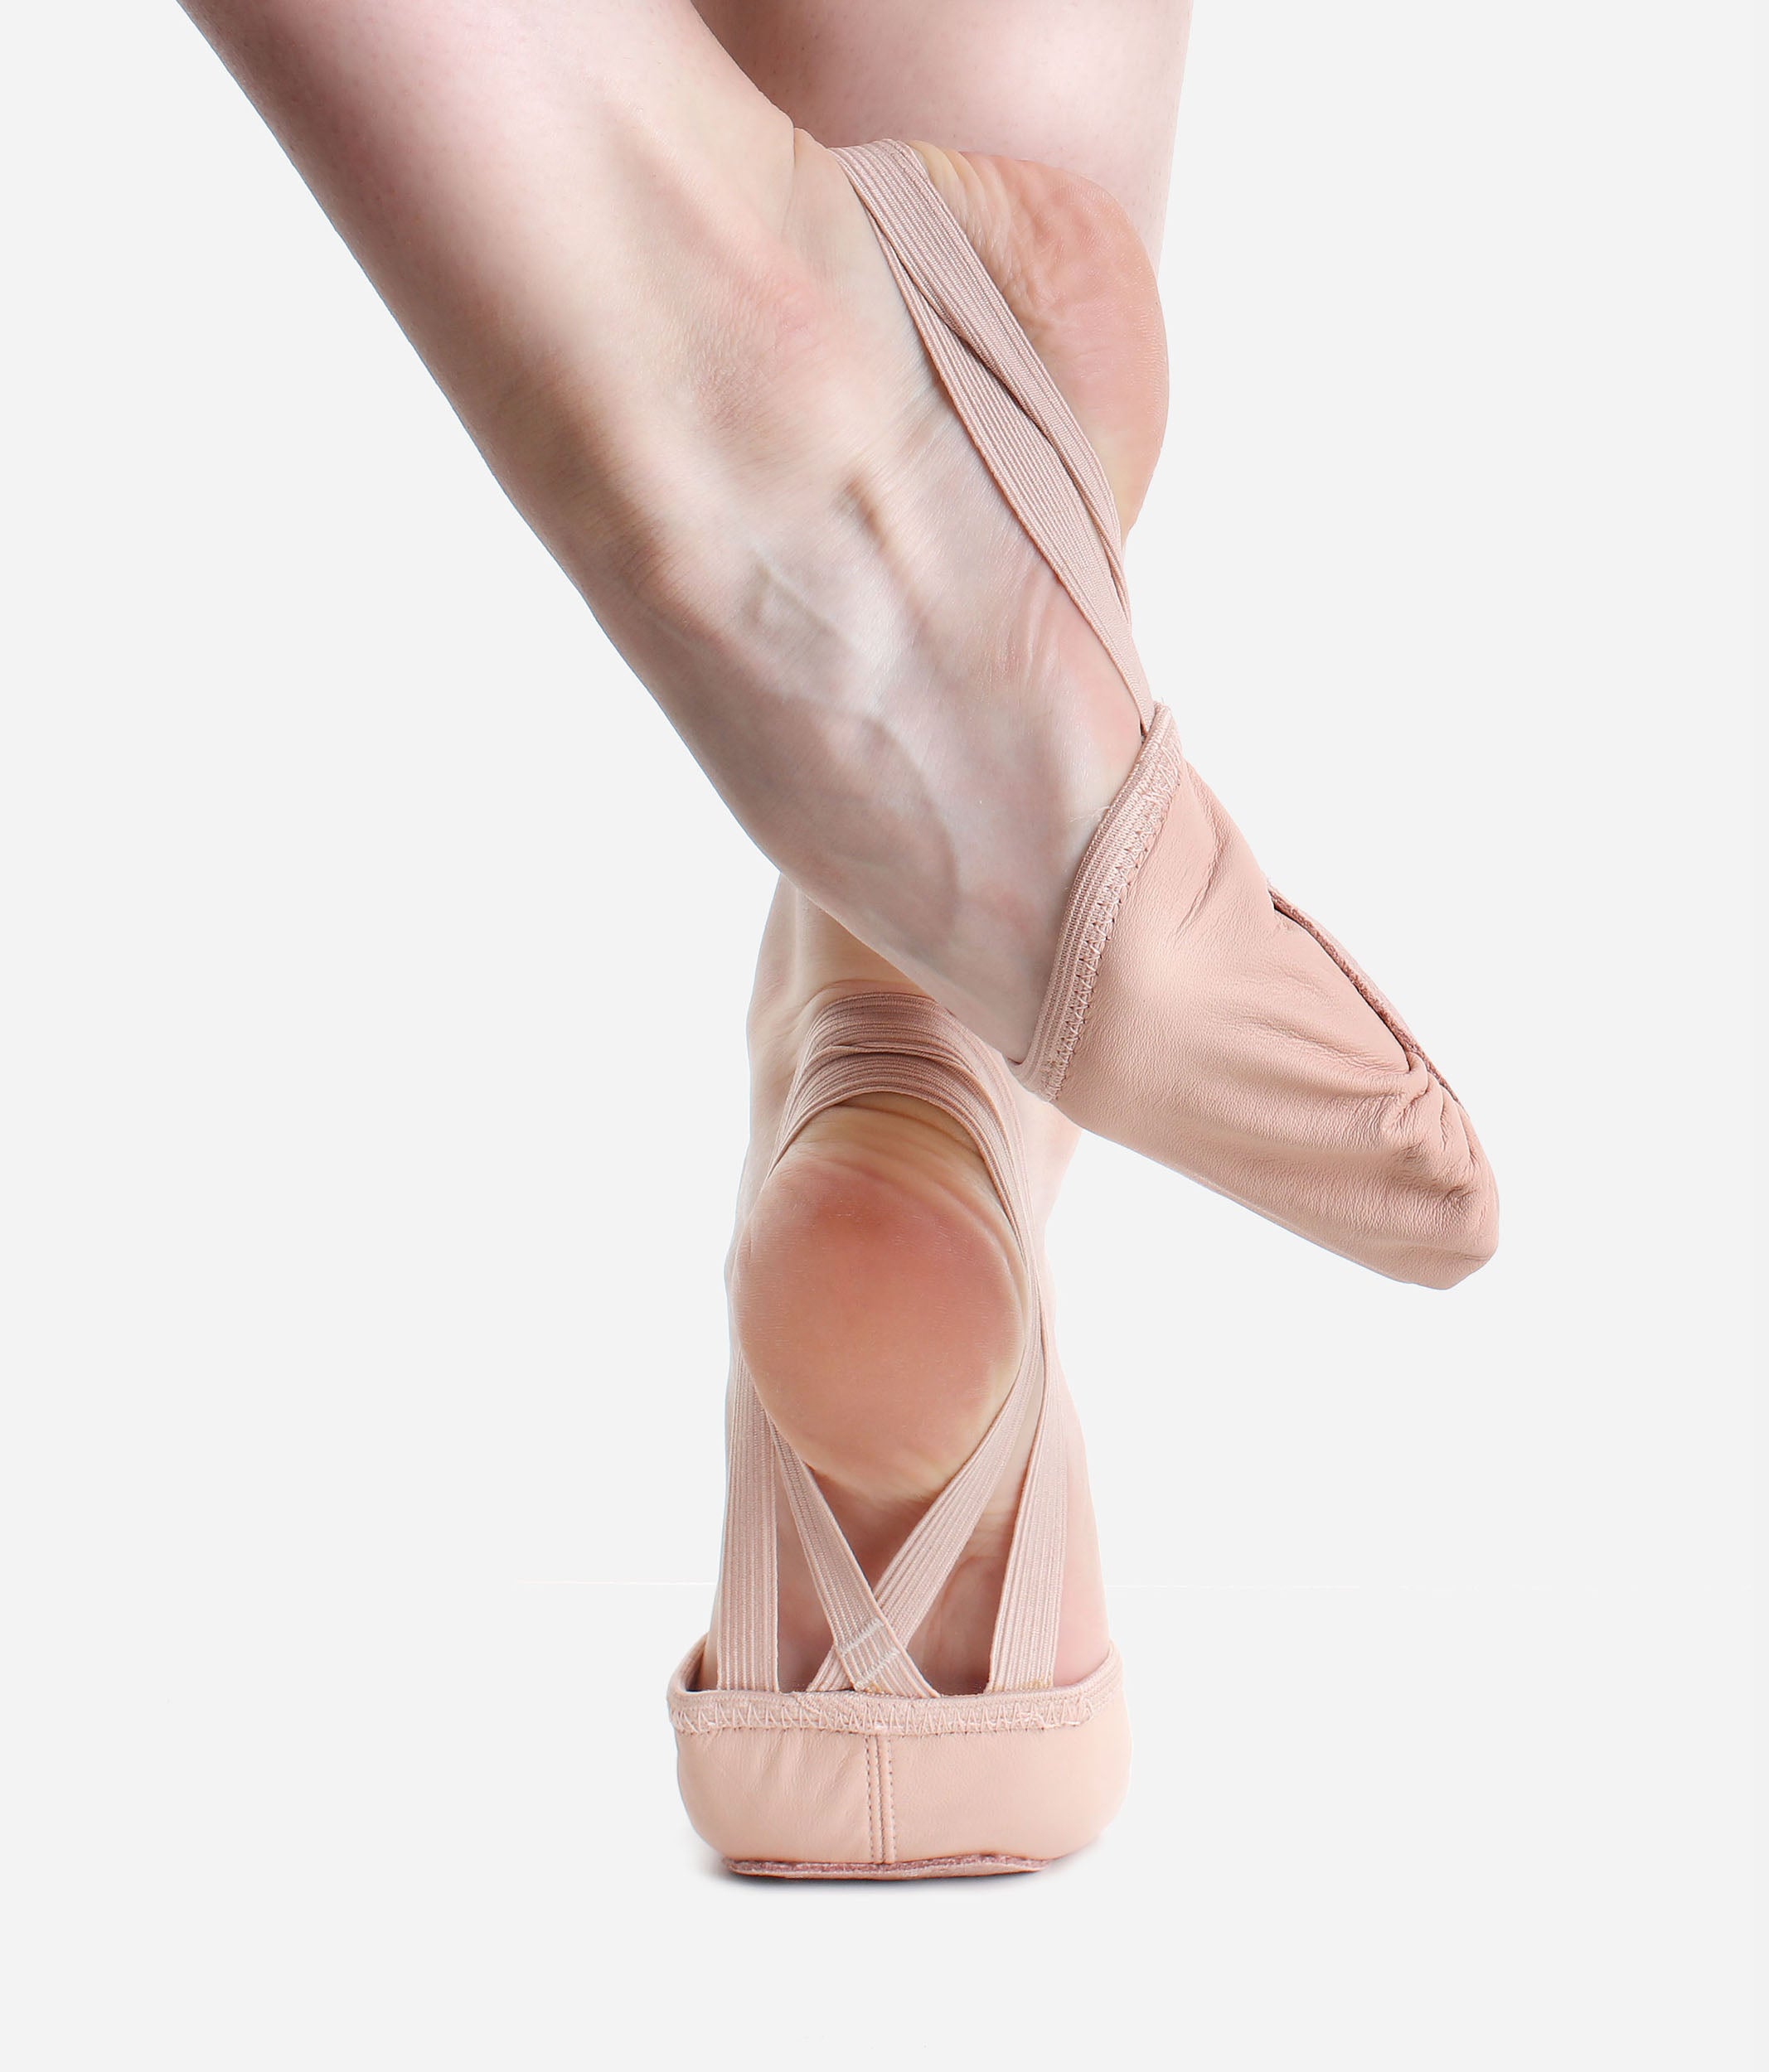 Sock Glue - 50ml – The Irish Dancer